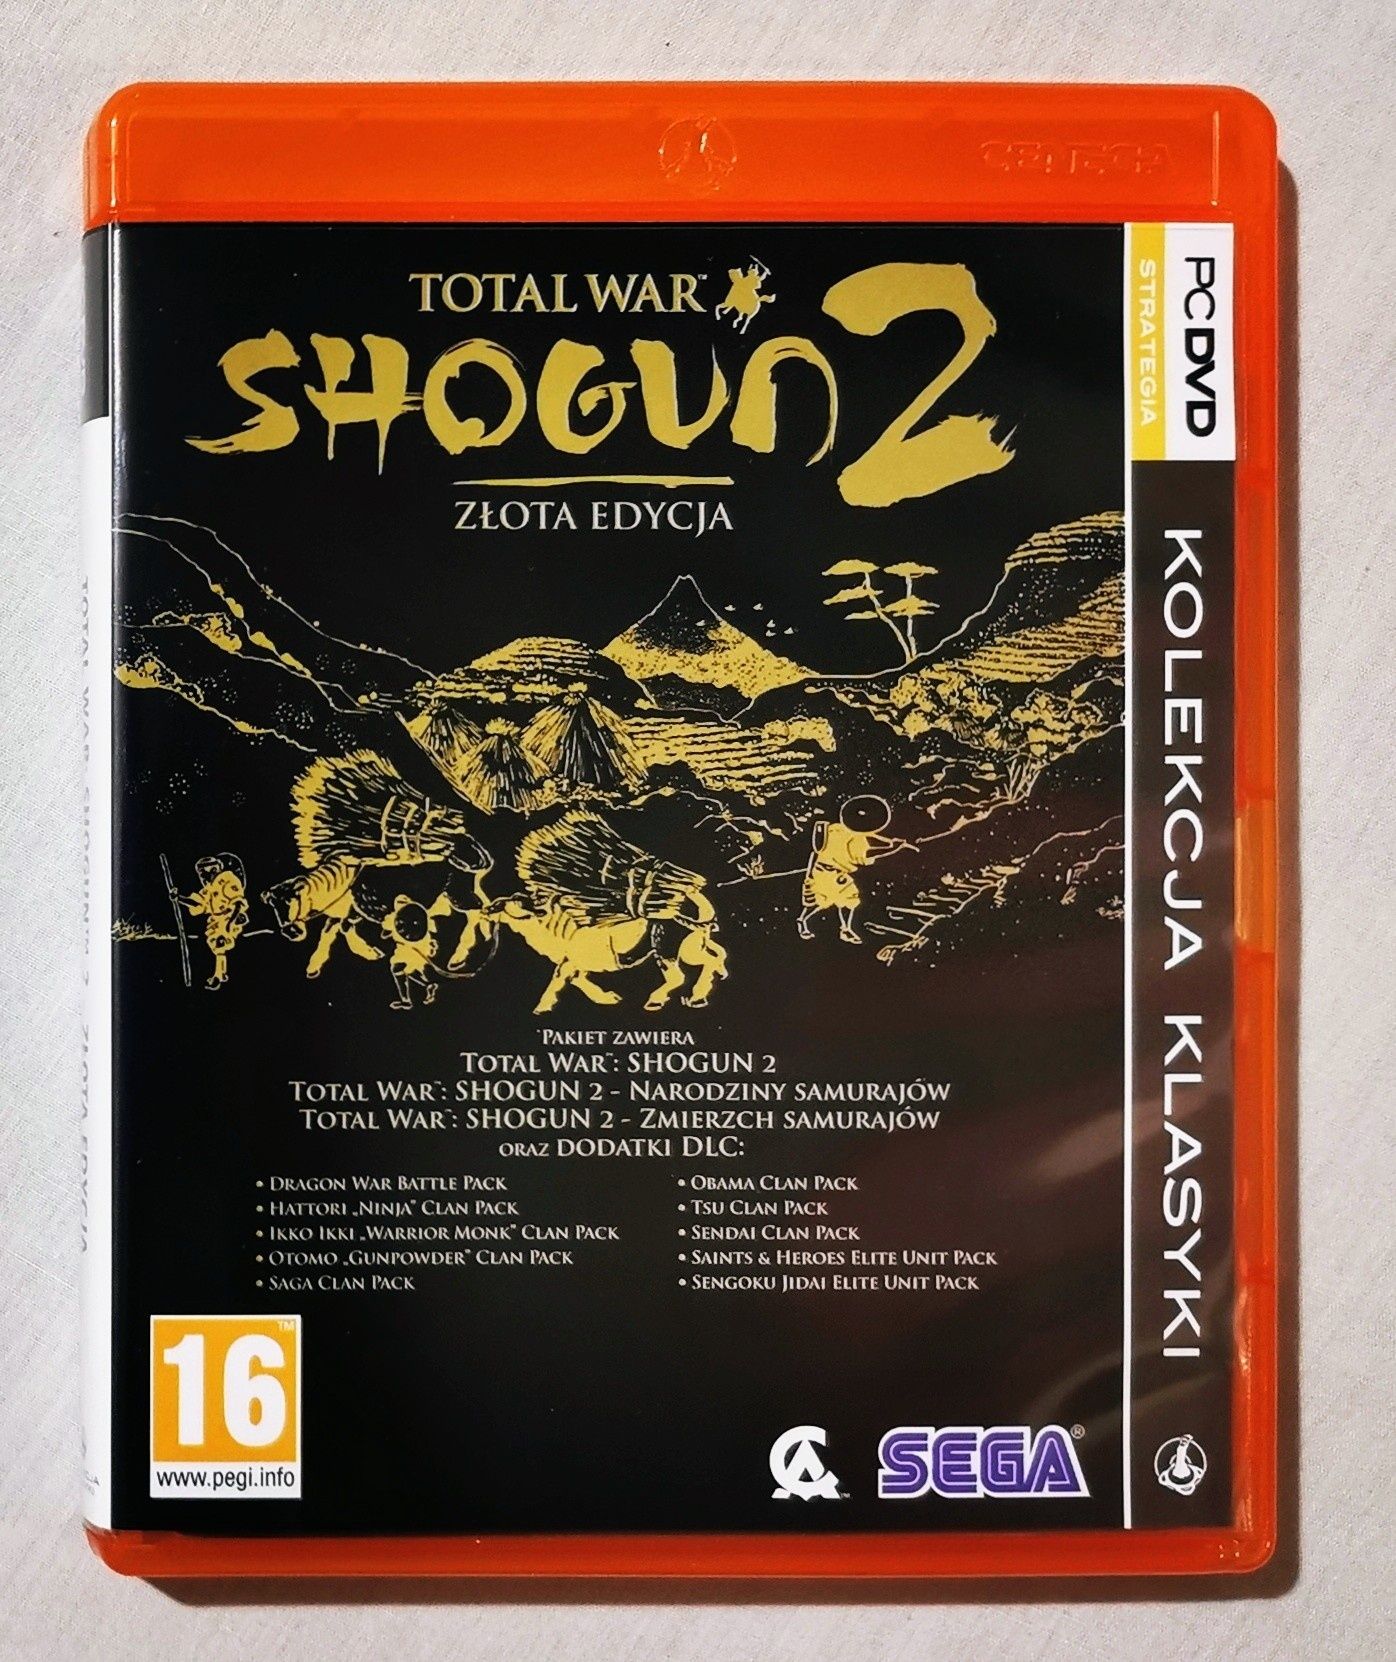 Total War: Shogun 2 II Złota Edycja PL gra komputerowa PC 3xDVD